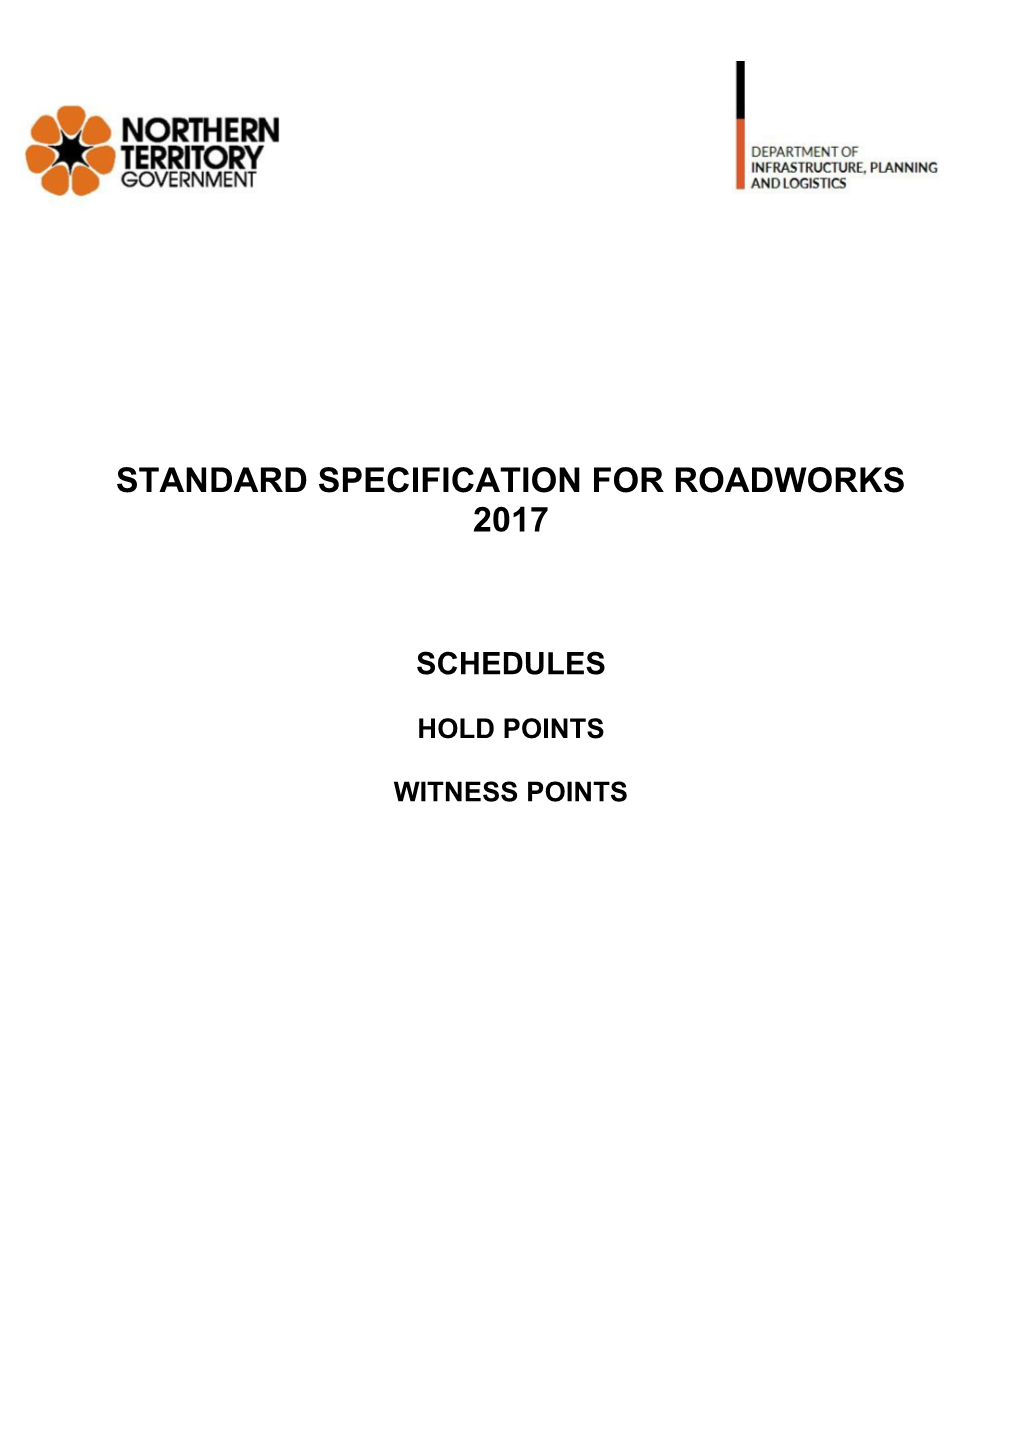 Standard Specification for Roadworks